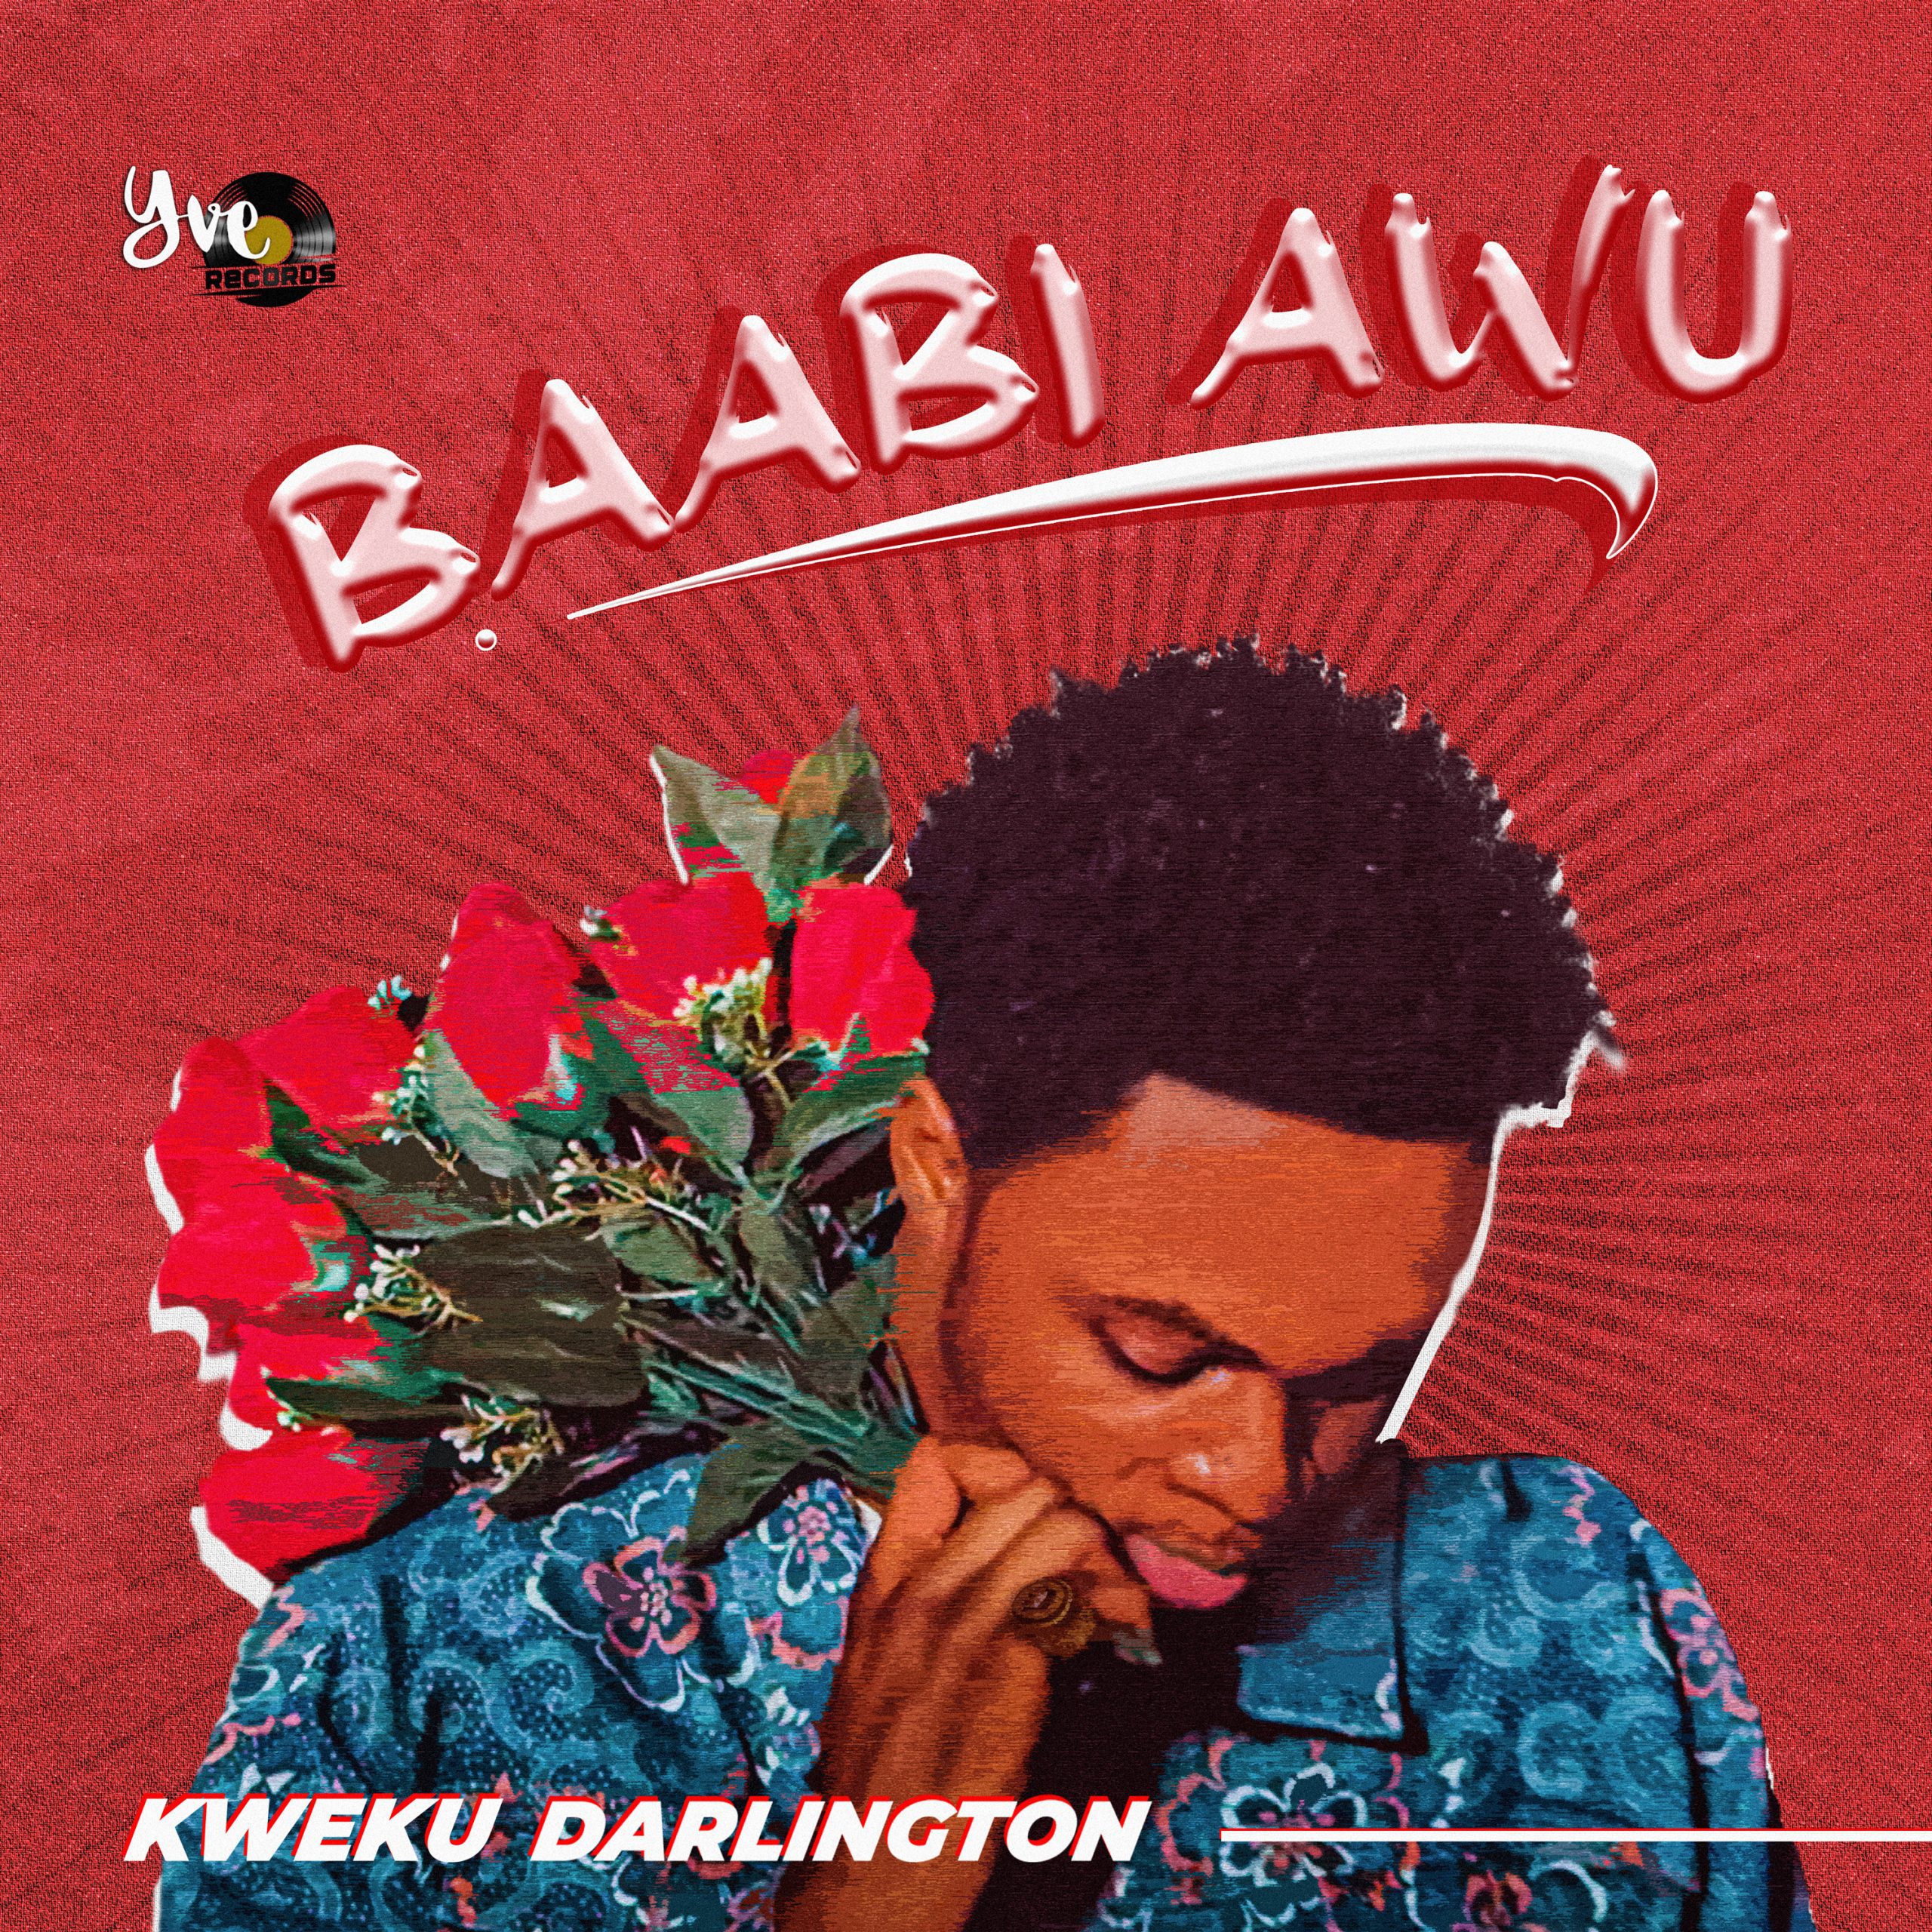 Kweku Darlington Finds Love On New Song ” Baabi Awu”.